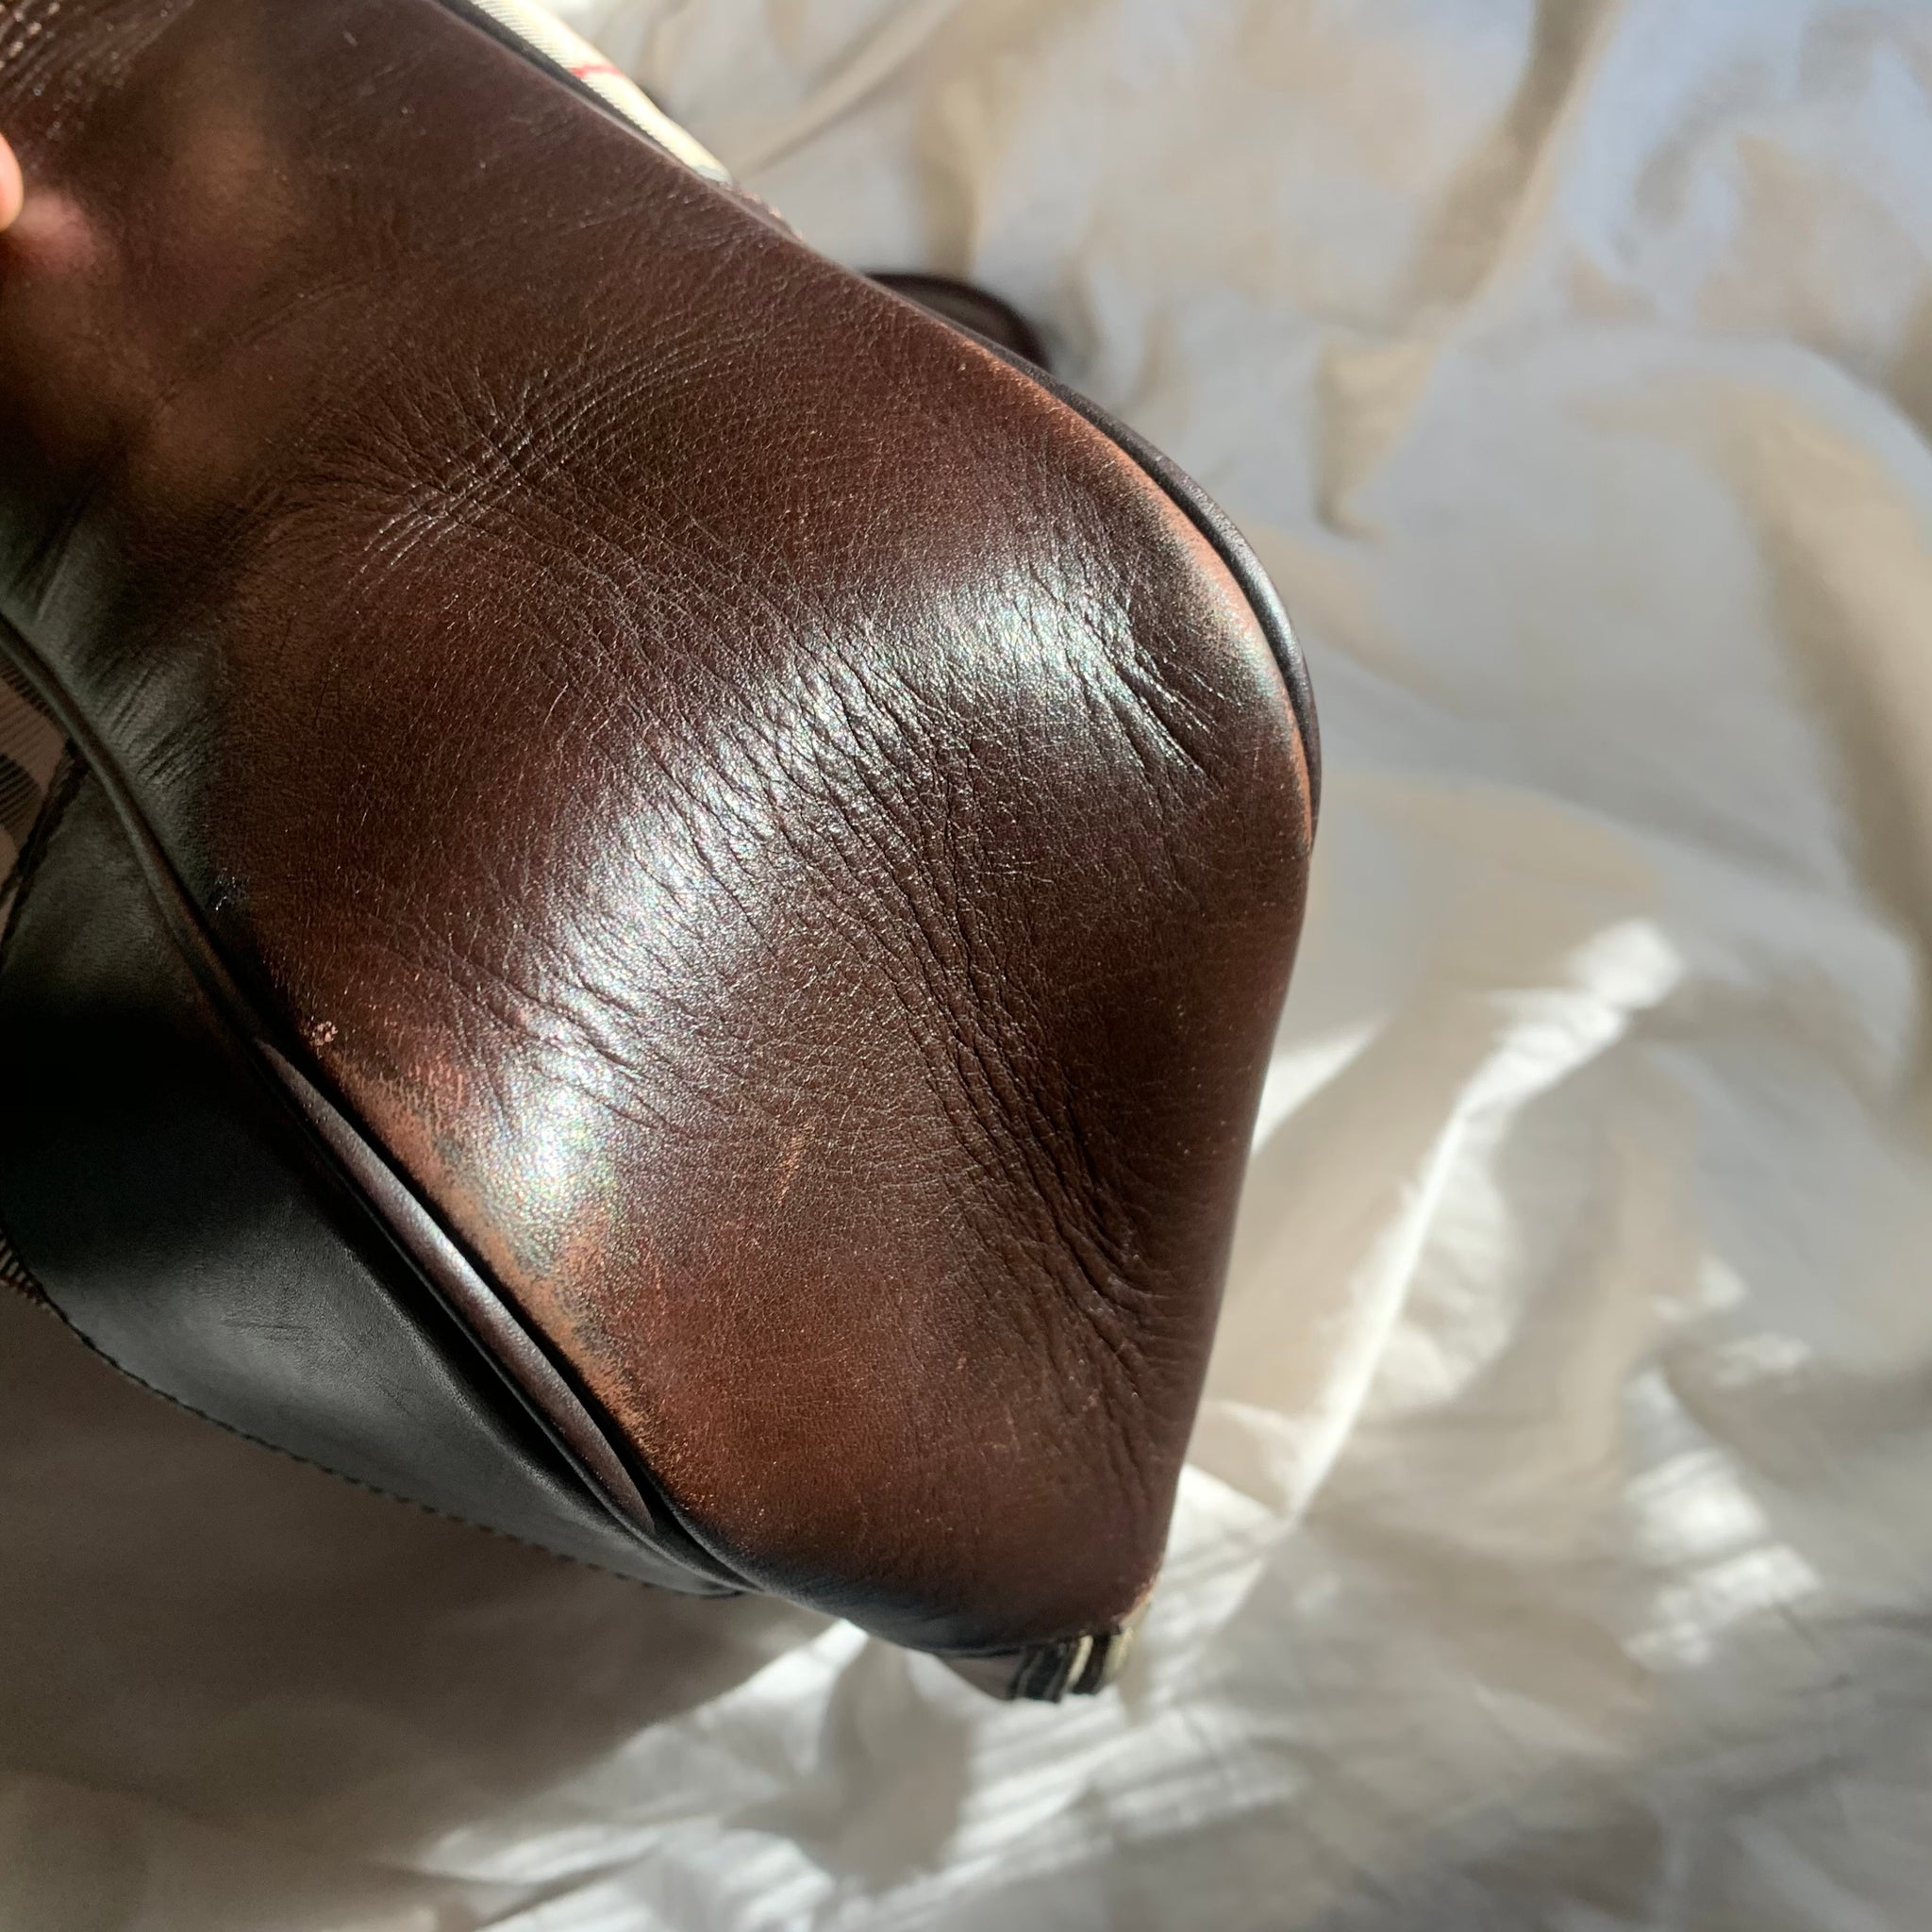 Burberry Nova Check PVC Leather Brown Beige Travel Bag